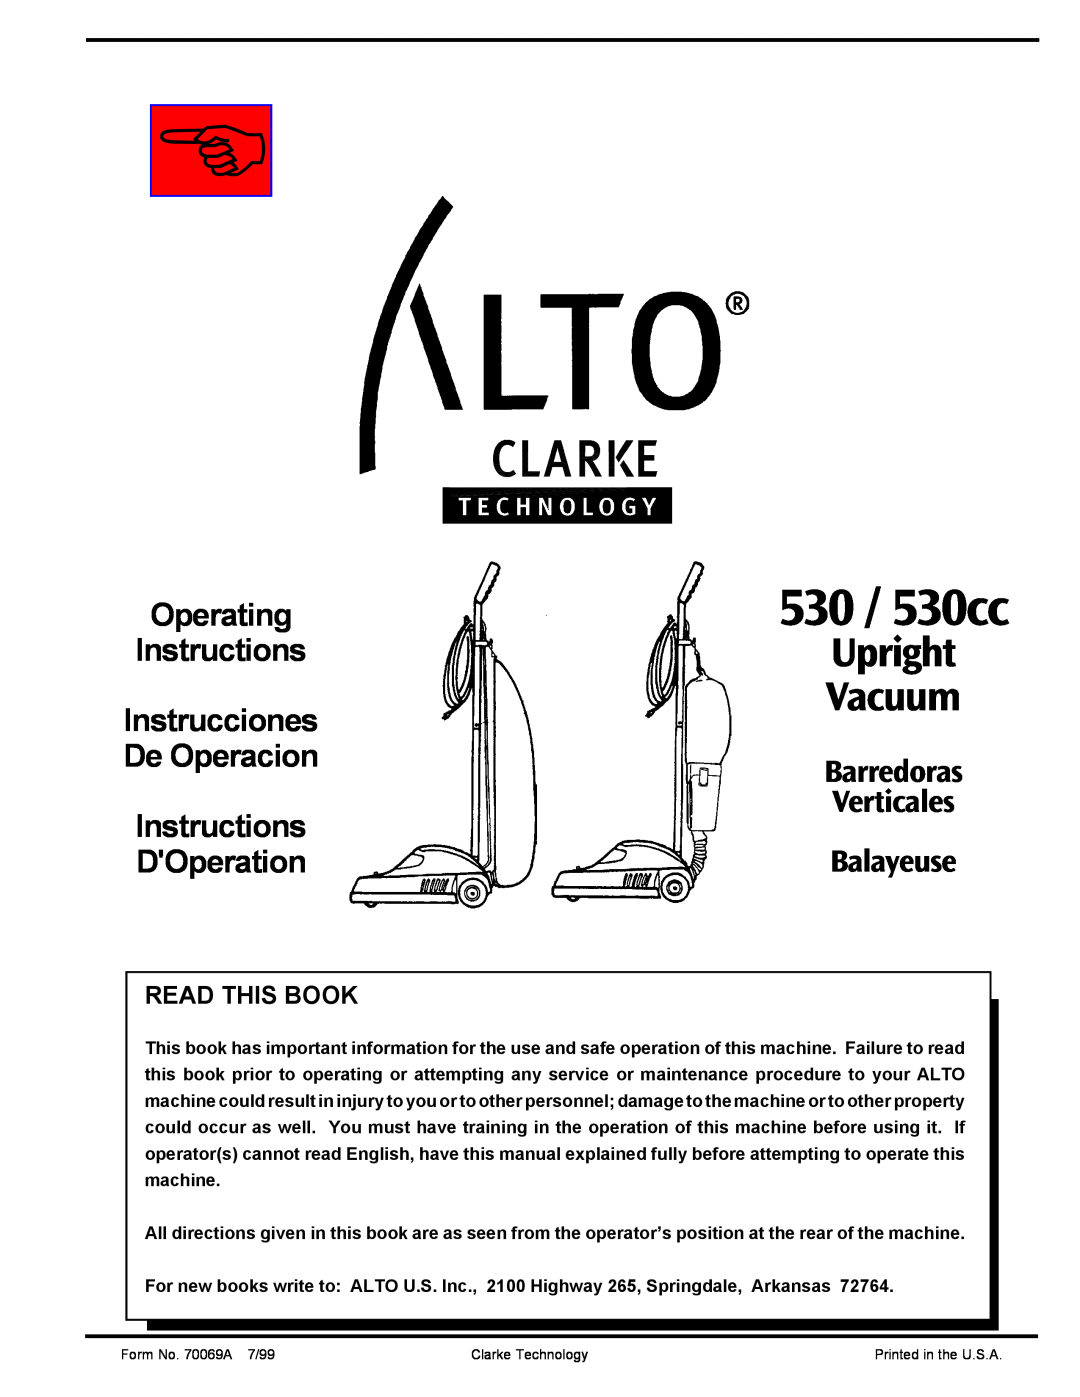 Nilfisk-ALTO manual Verticales, Read This Book, 530 / 530cc, Upright, Vacuum, Operating, Instructions, Instrucciones 